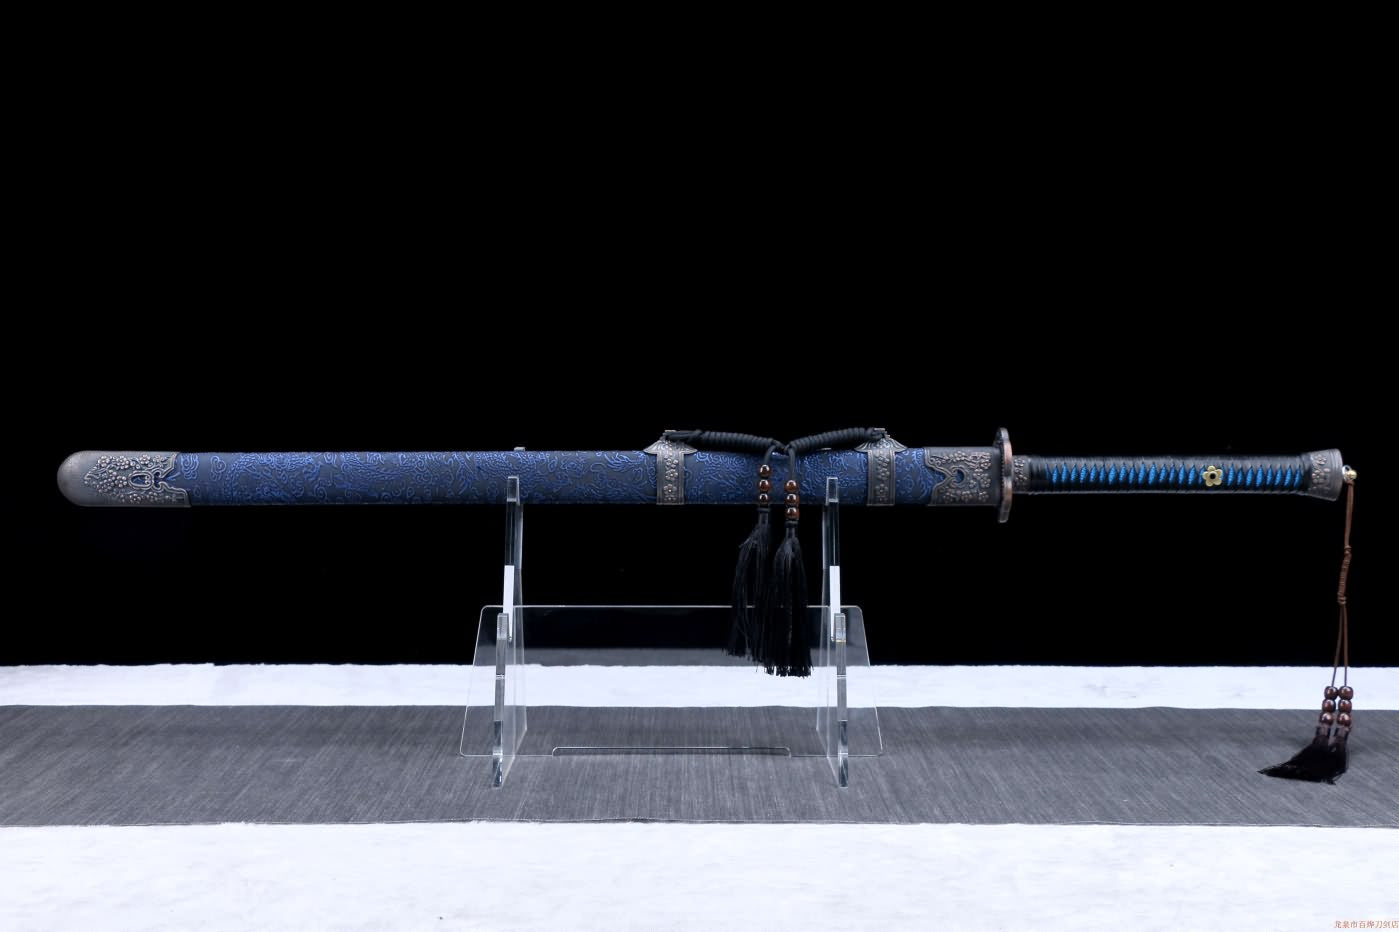 Qing dao swords,High carbon steel black blade,Blue Pu scabbard